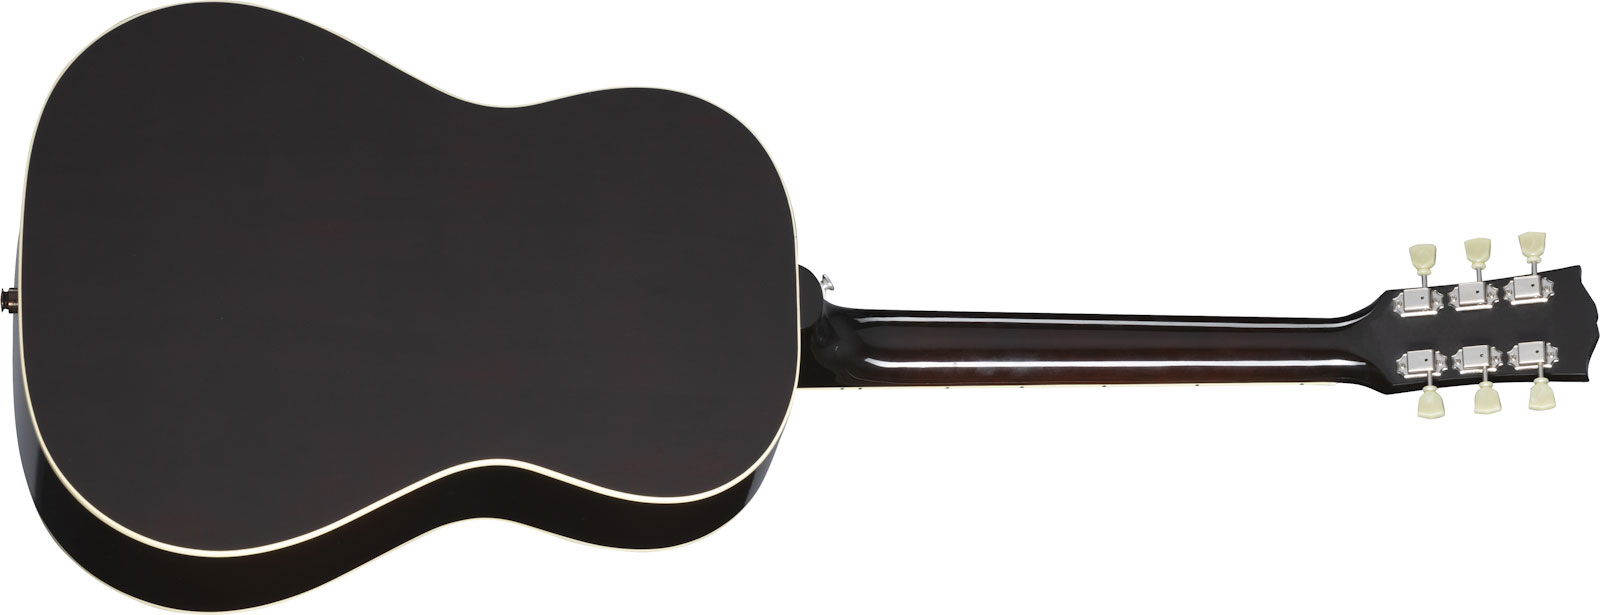 Gibson Nathaniel Rateliff Lg-2 Western Signature Epicea Acajou Rw - Vintage Sunburst - Guitare Electro Acoustique - Variation 1